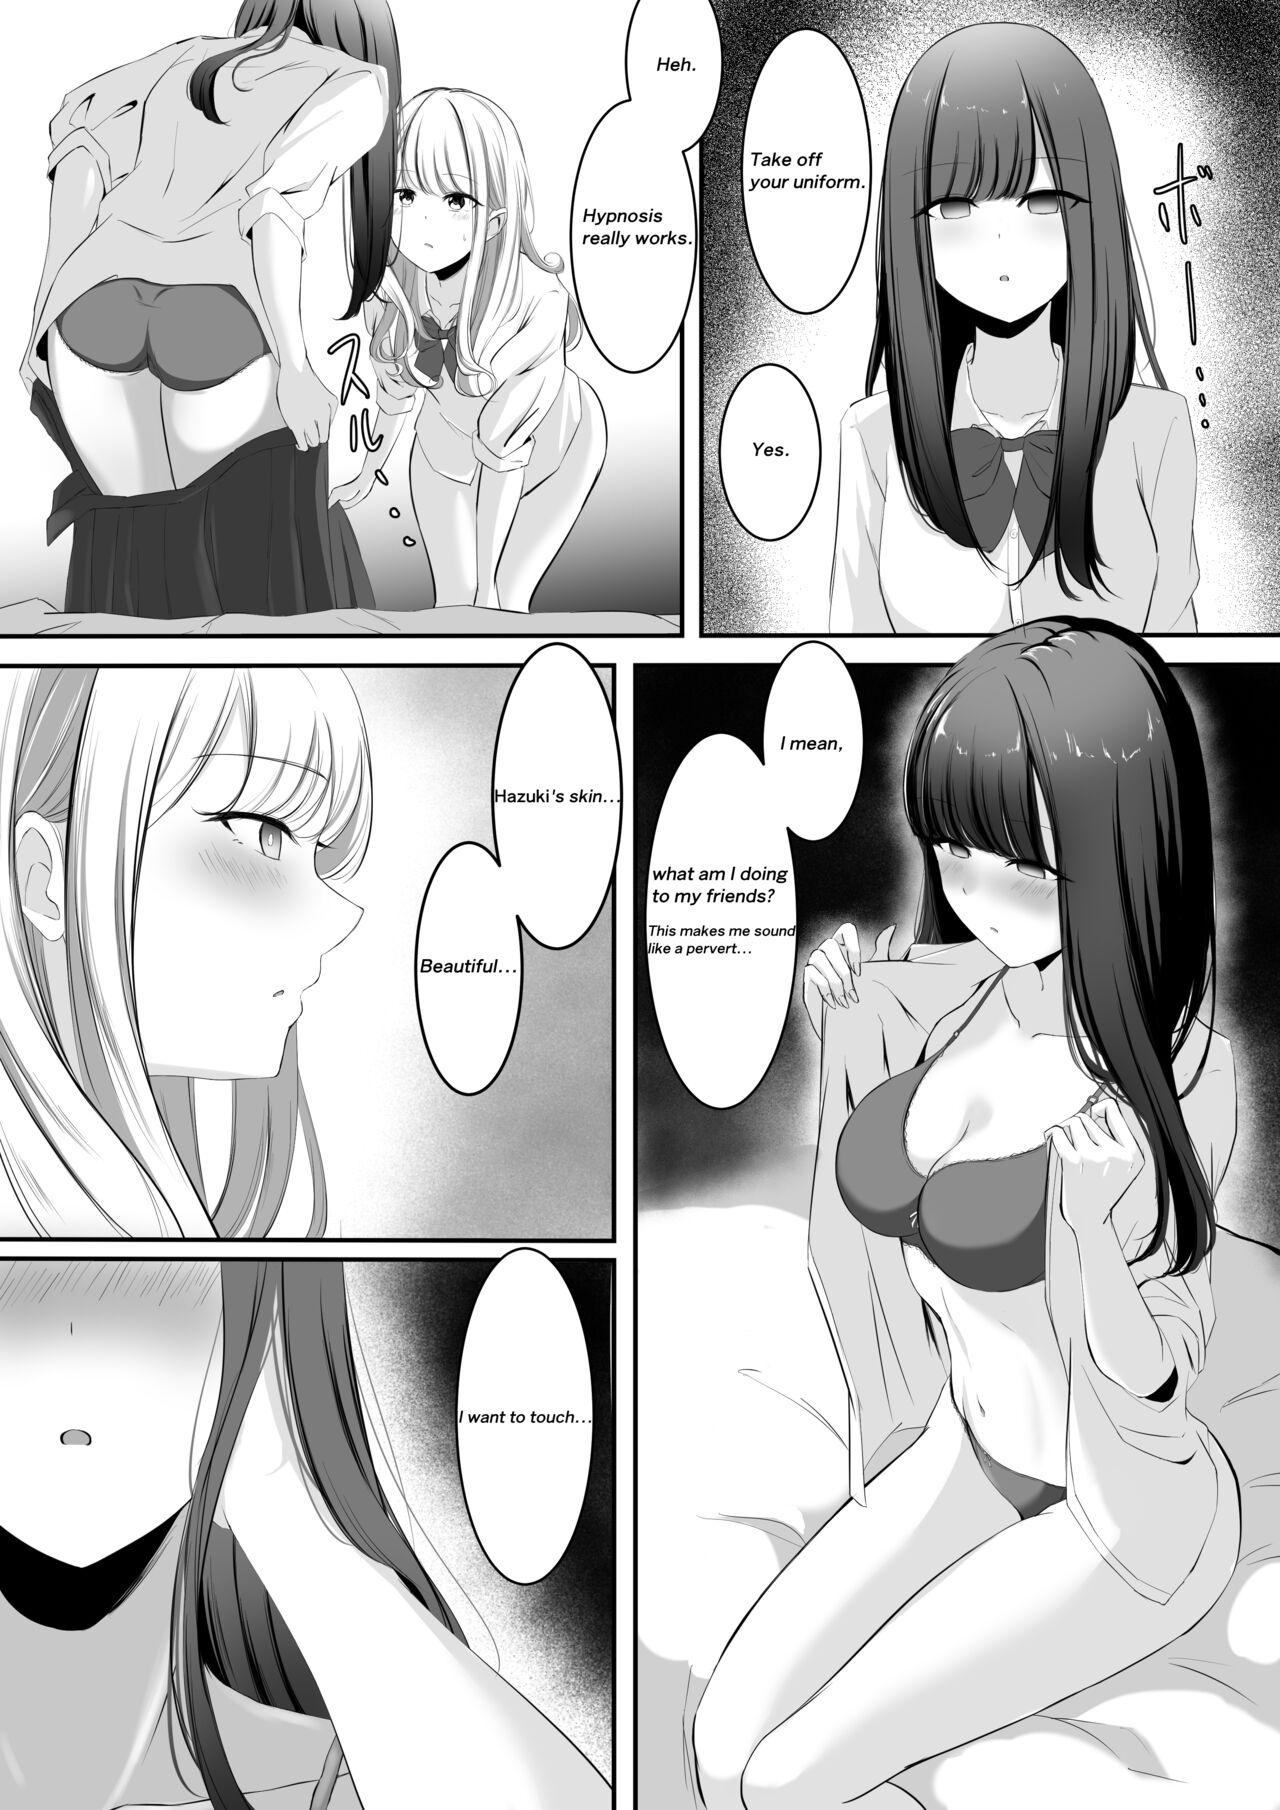 Yuri comic Part 1,2 and 3. 2